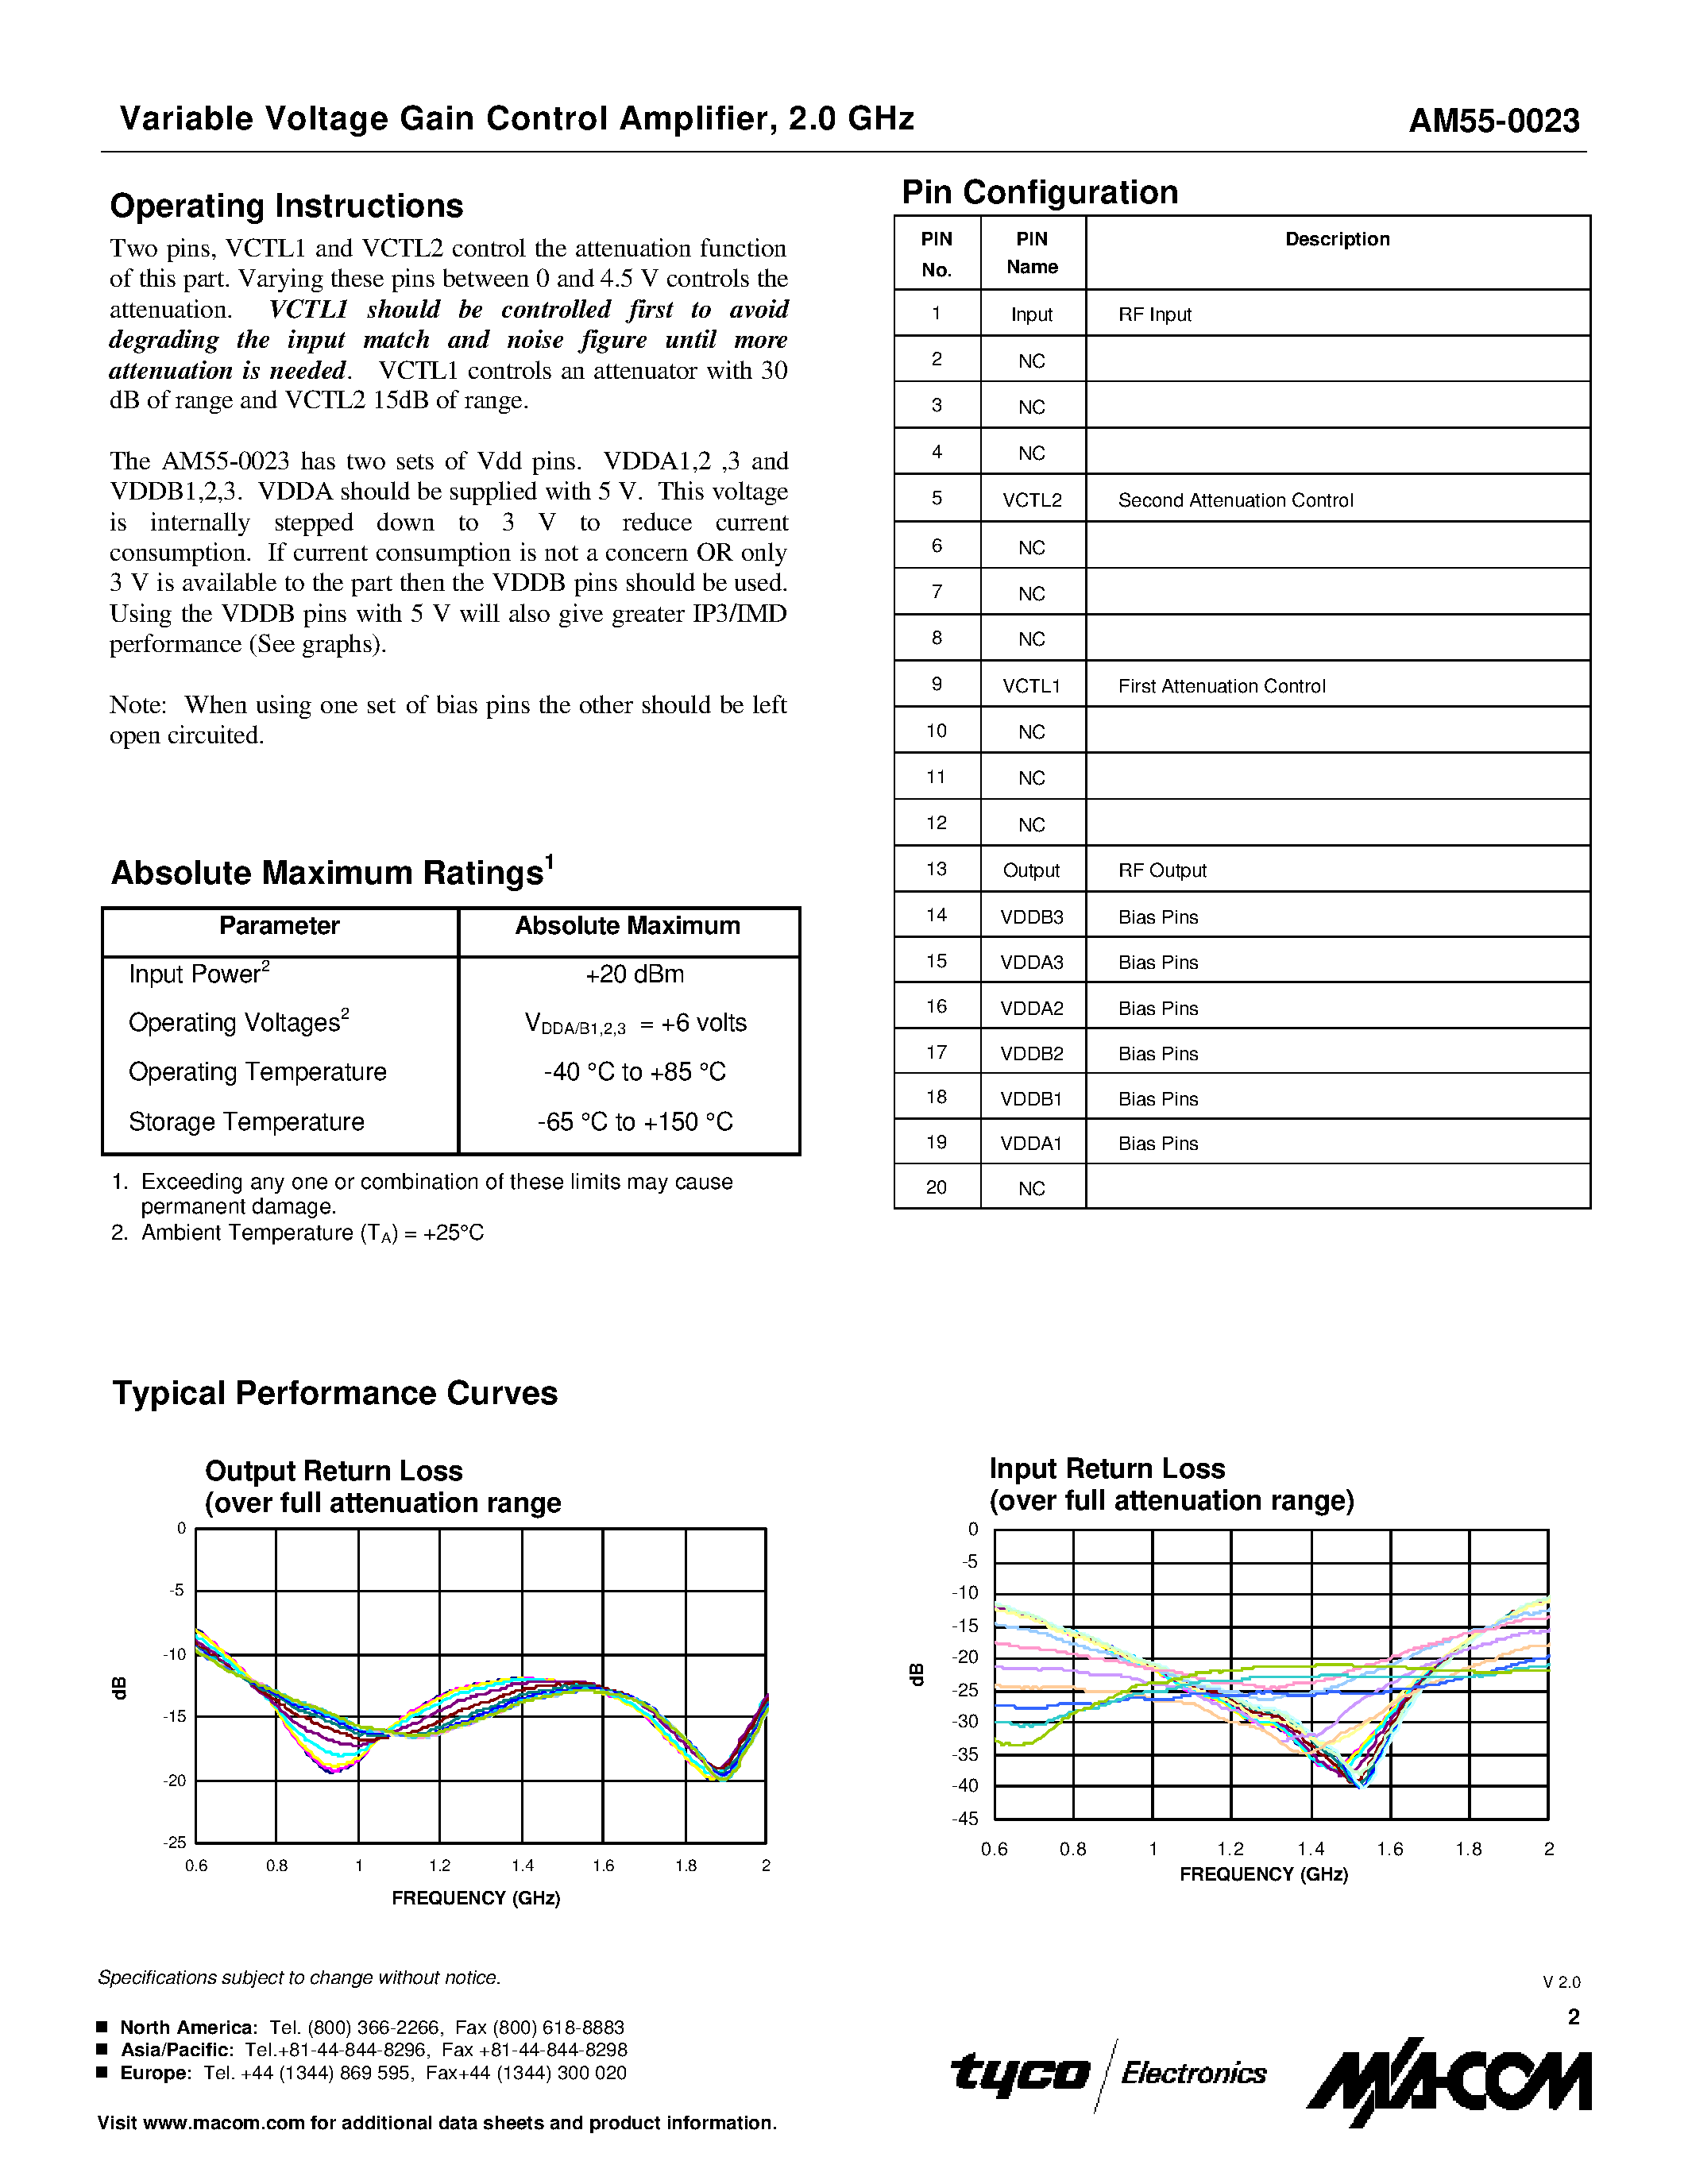 Даташит AM55-0023 - Variable Voltage Gain Control Amplifier 0.8 - 2.0 GHz страница 2